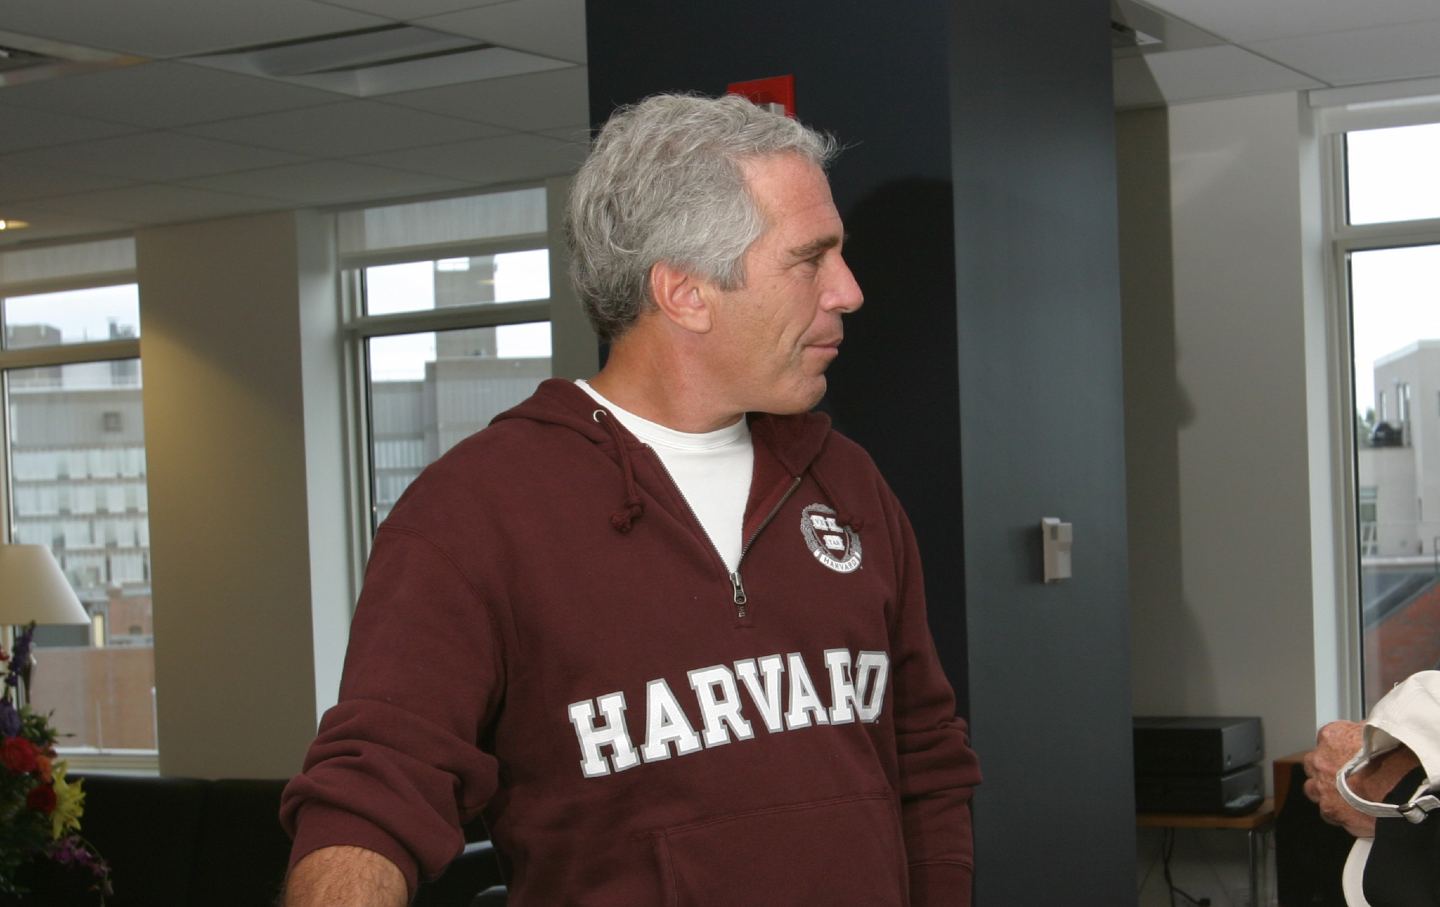 Jeffrey Epstein is photographed wearing a Harvard sweatshirt.